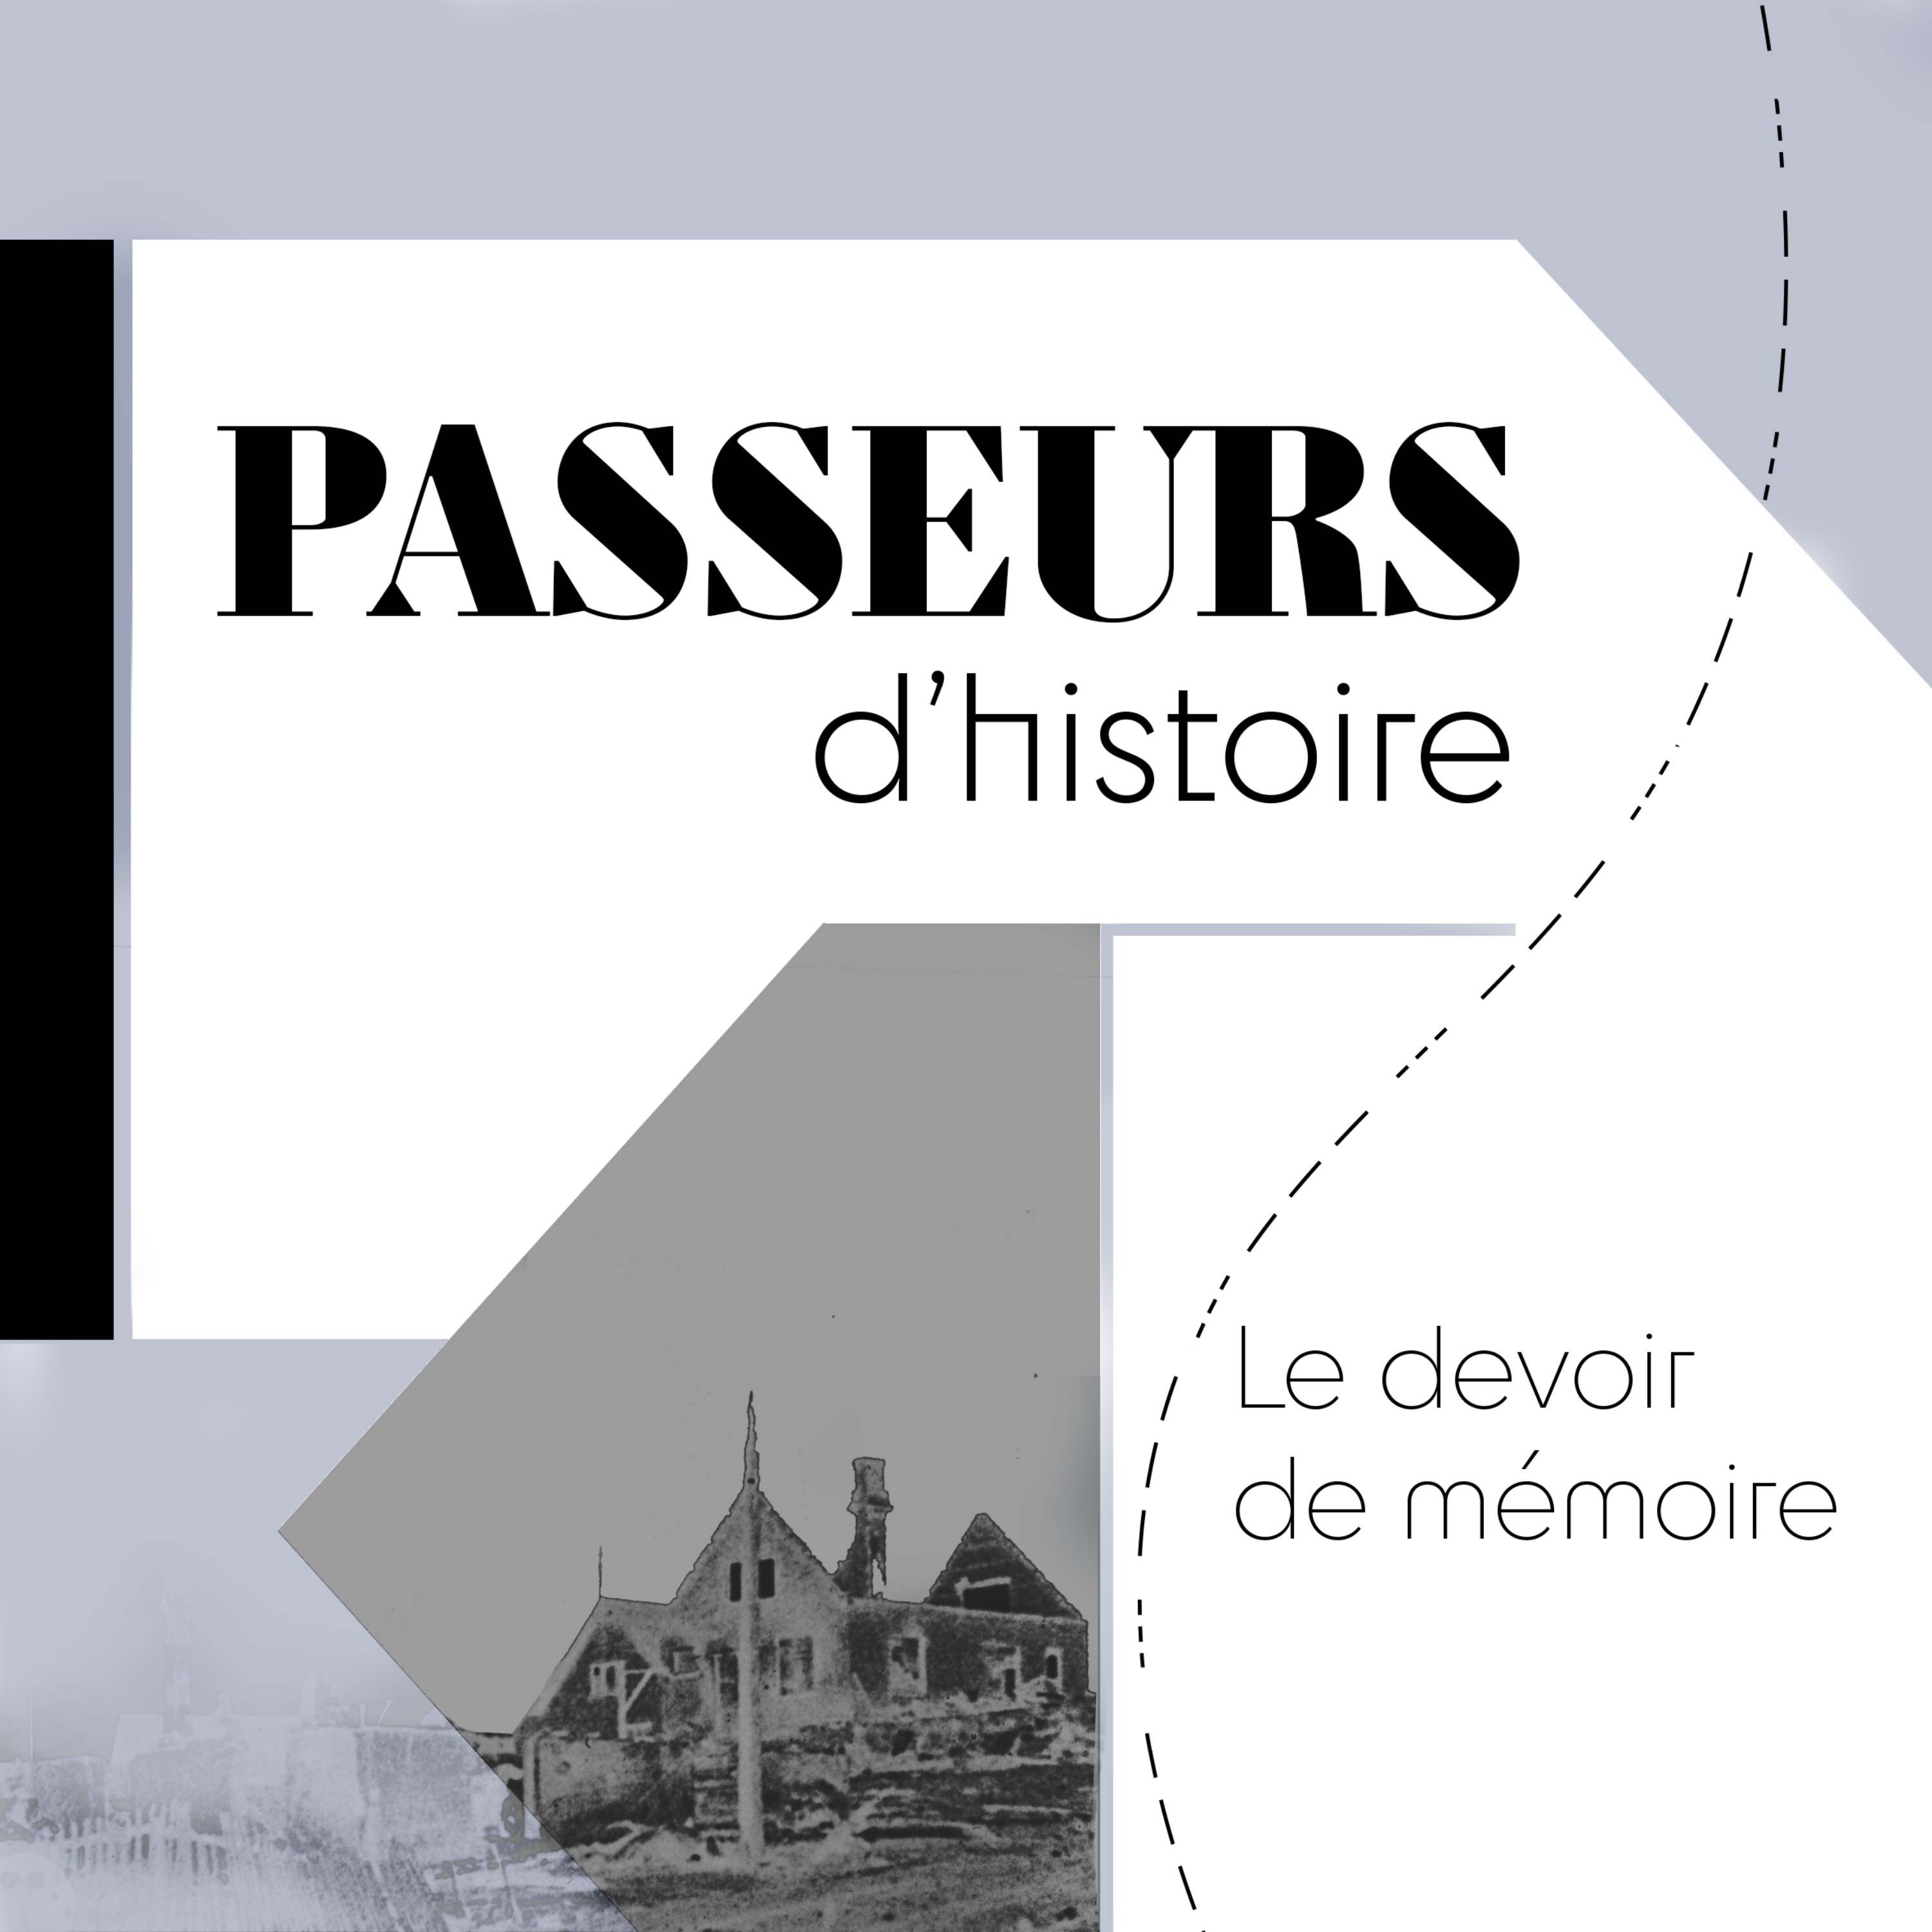 cover art for PASSEURS d'histoire 1/6 